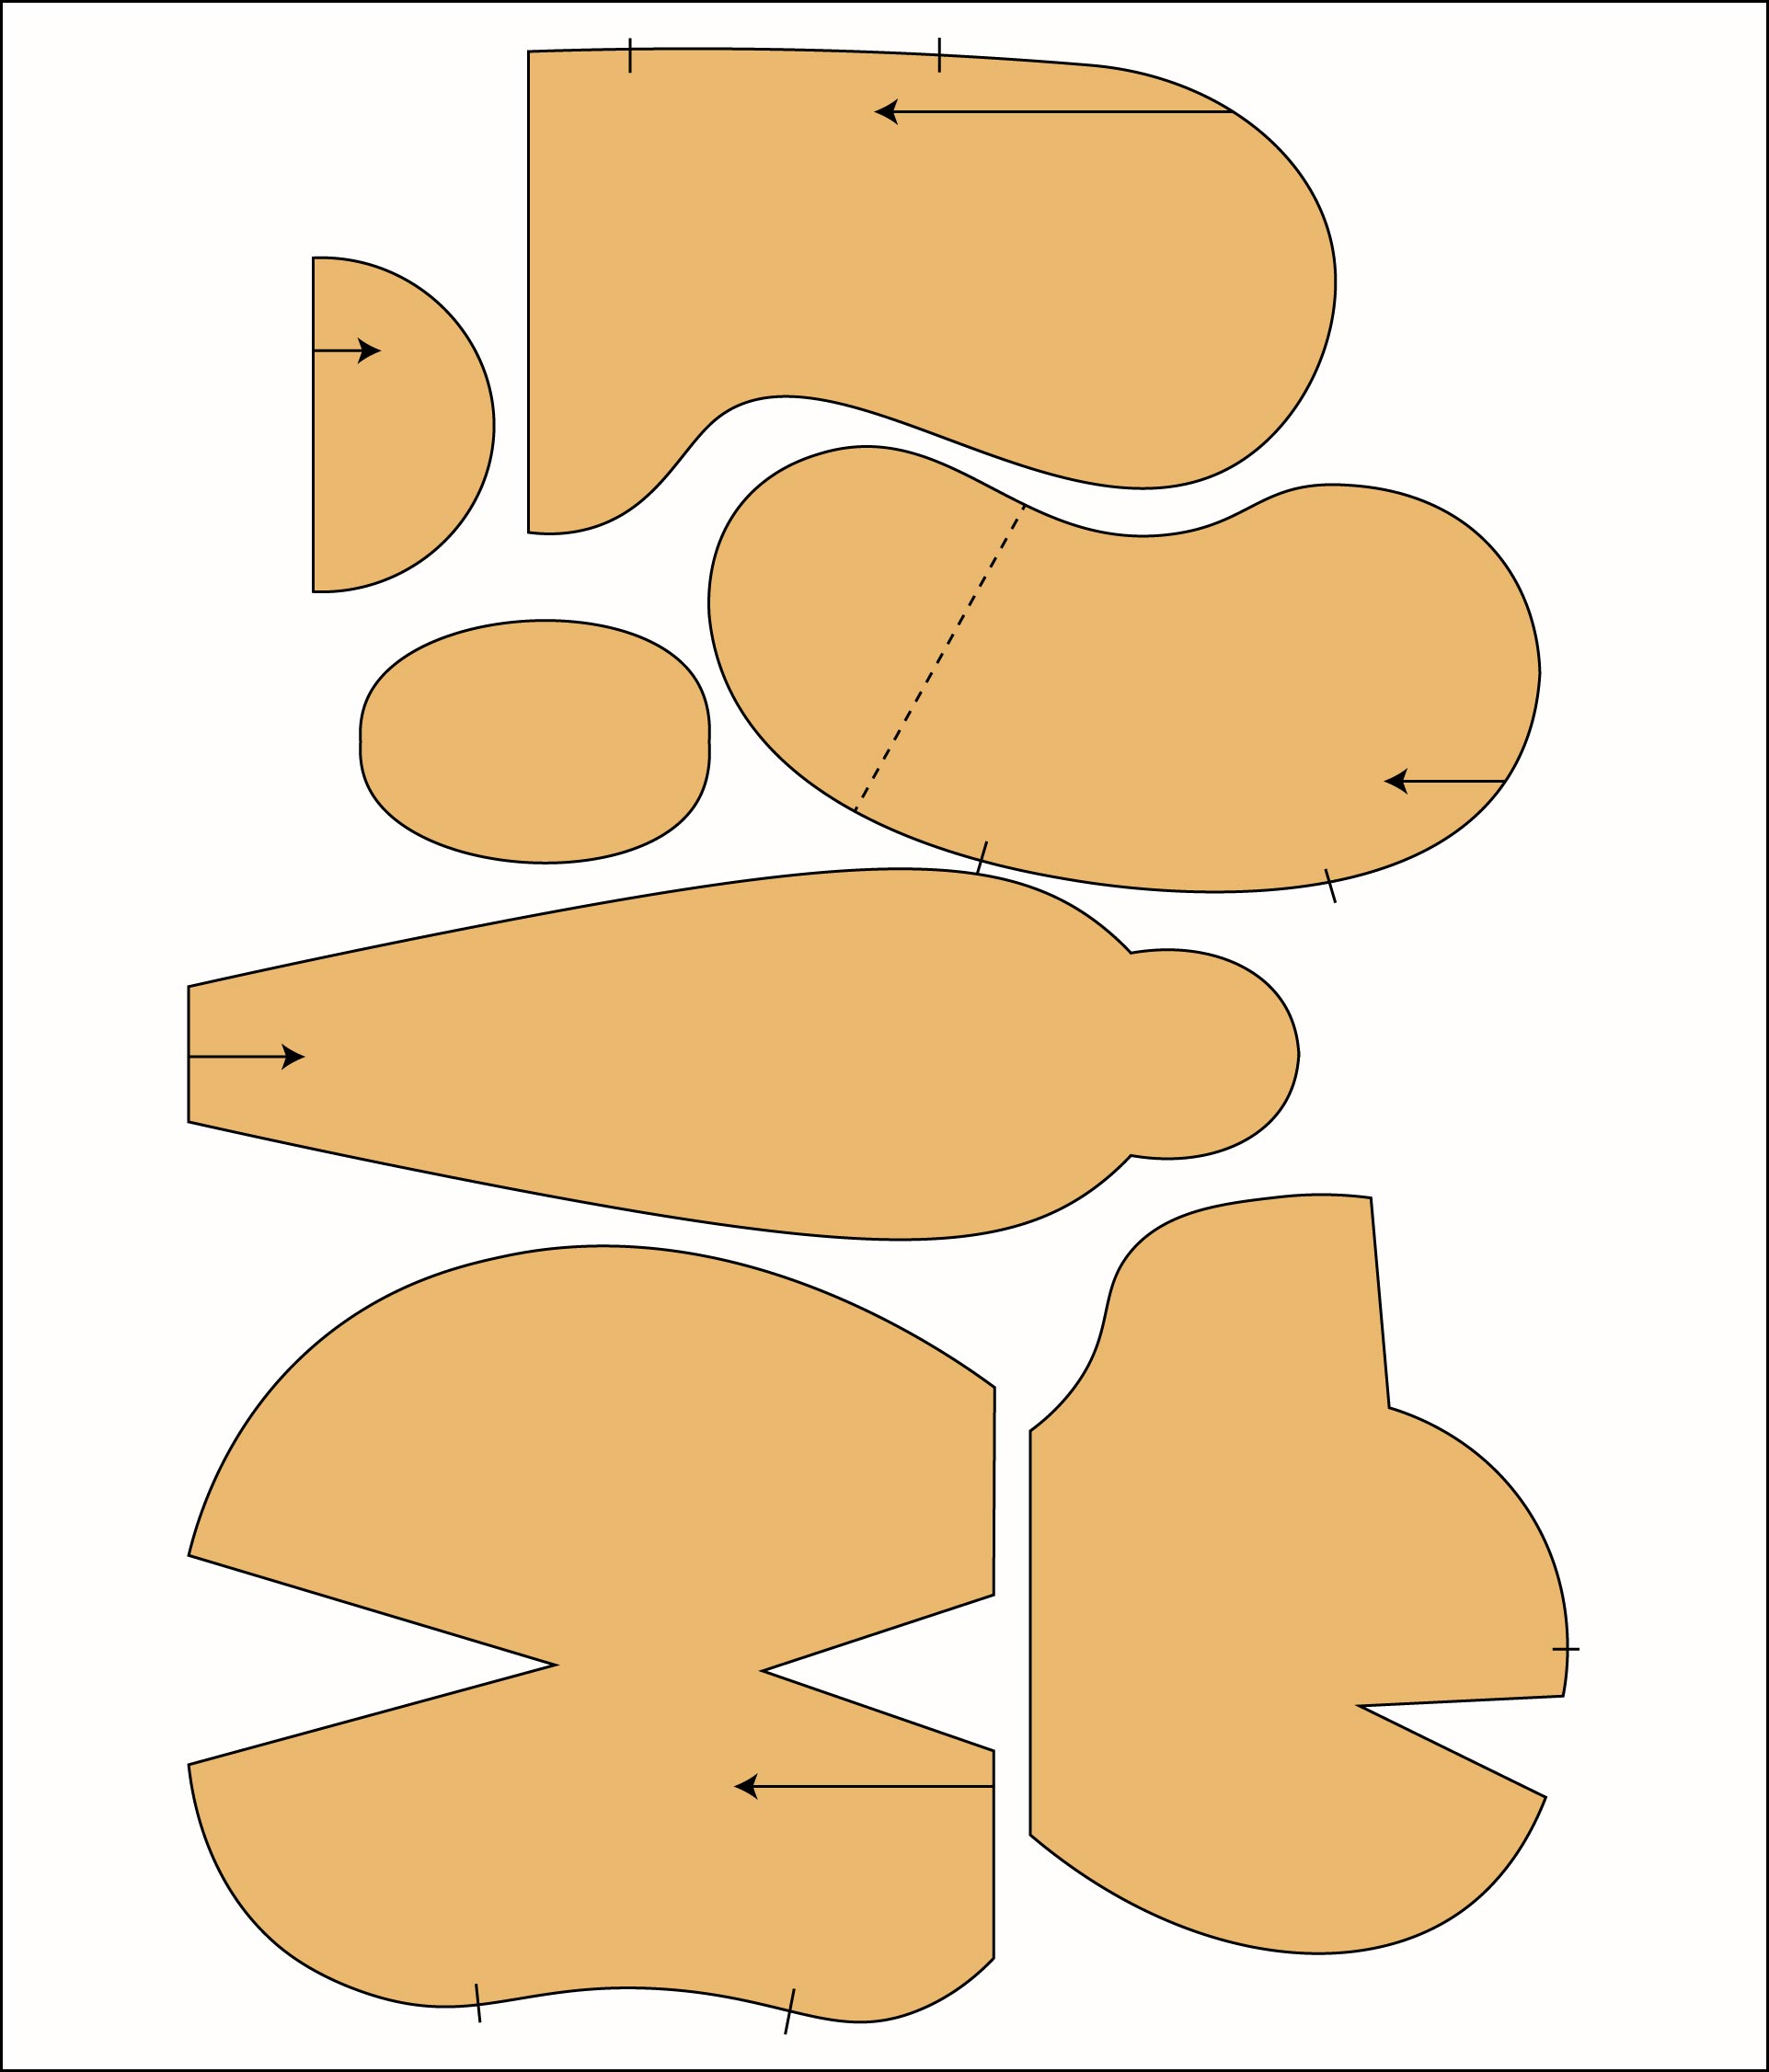 10-best-printable-teddy-bear-sewing-pattern-pdf-for-free-at-printablee